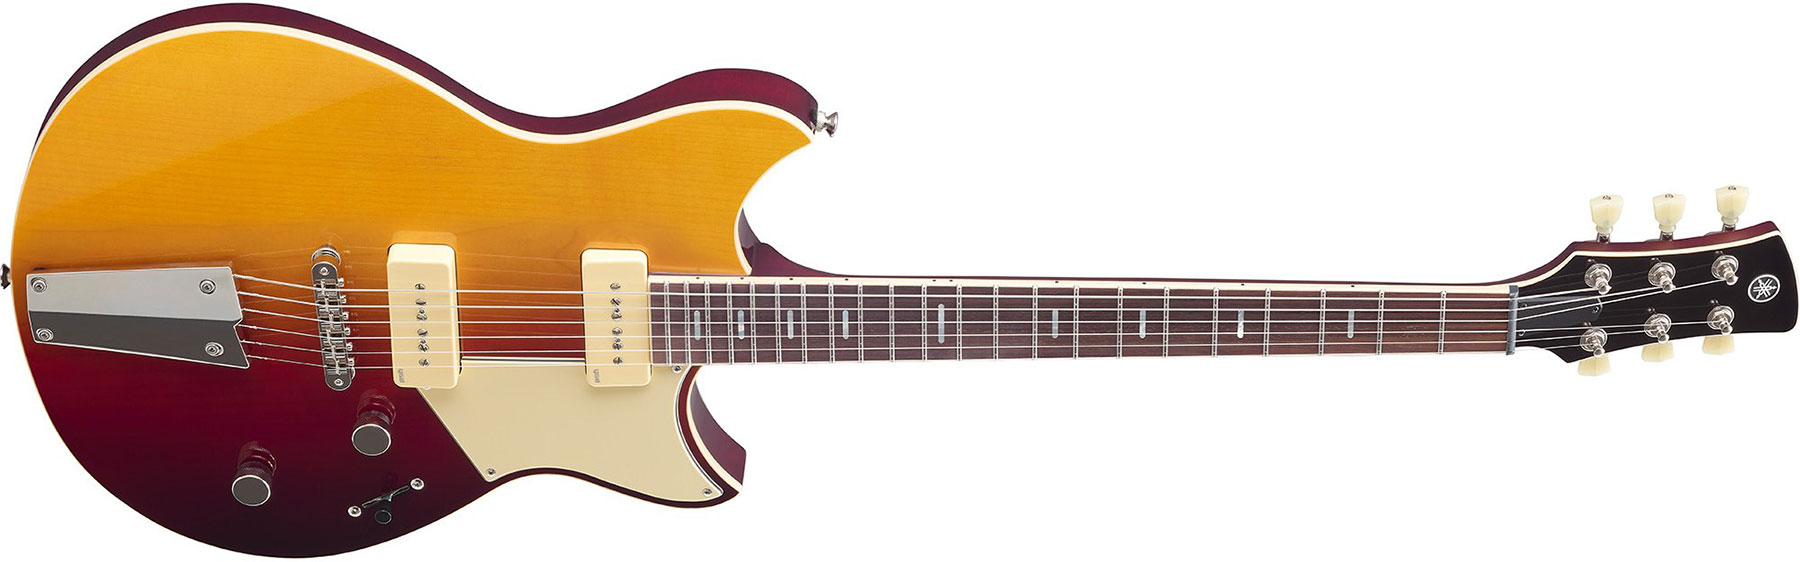 Yamaha Rss02t Revstar Standard 2p90 Ht Rw - Sunset Sunburst - Guitarra eléctrica de doble corte - Variation 1